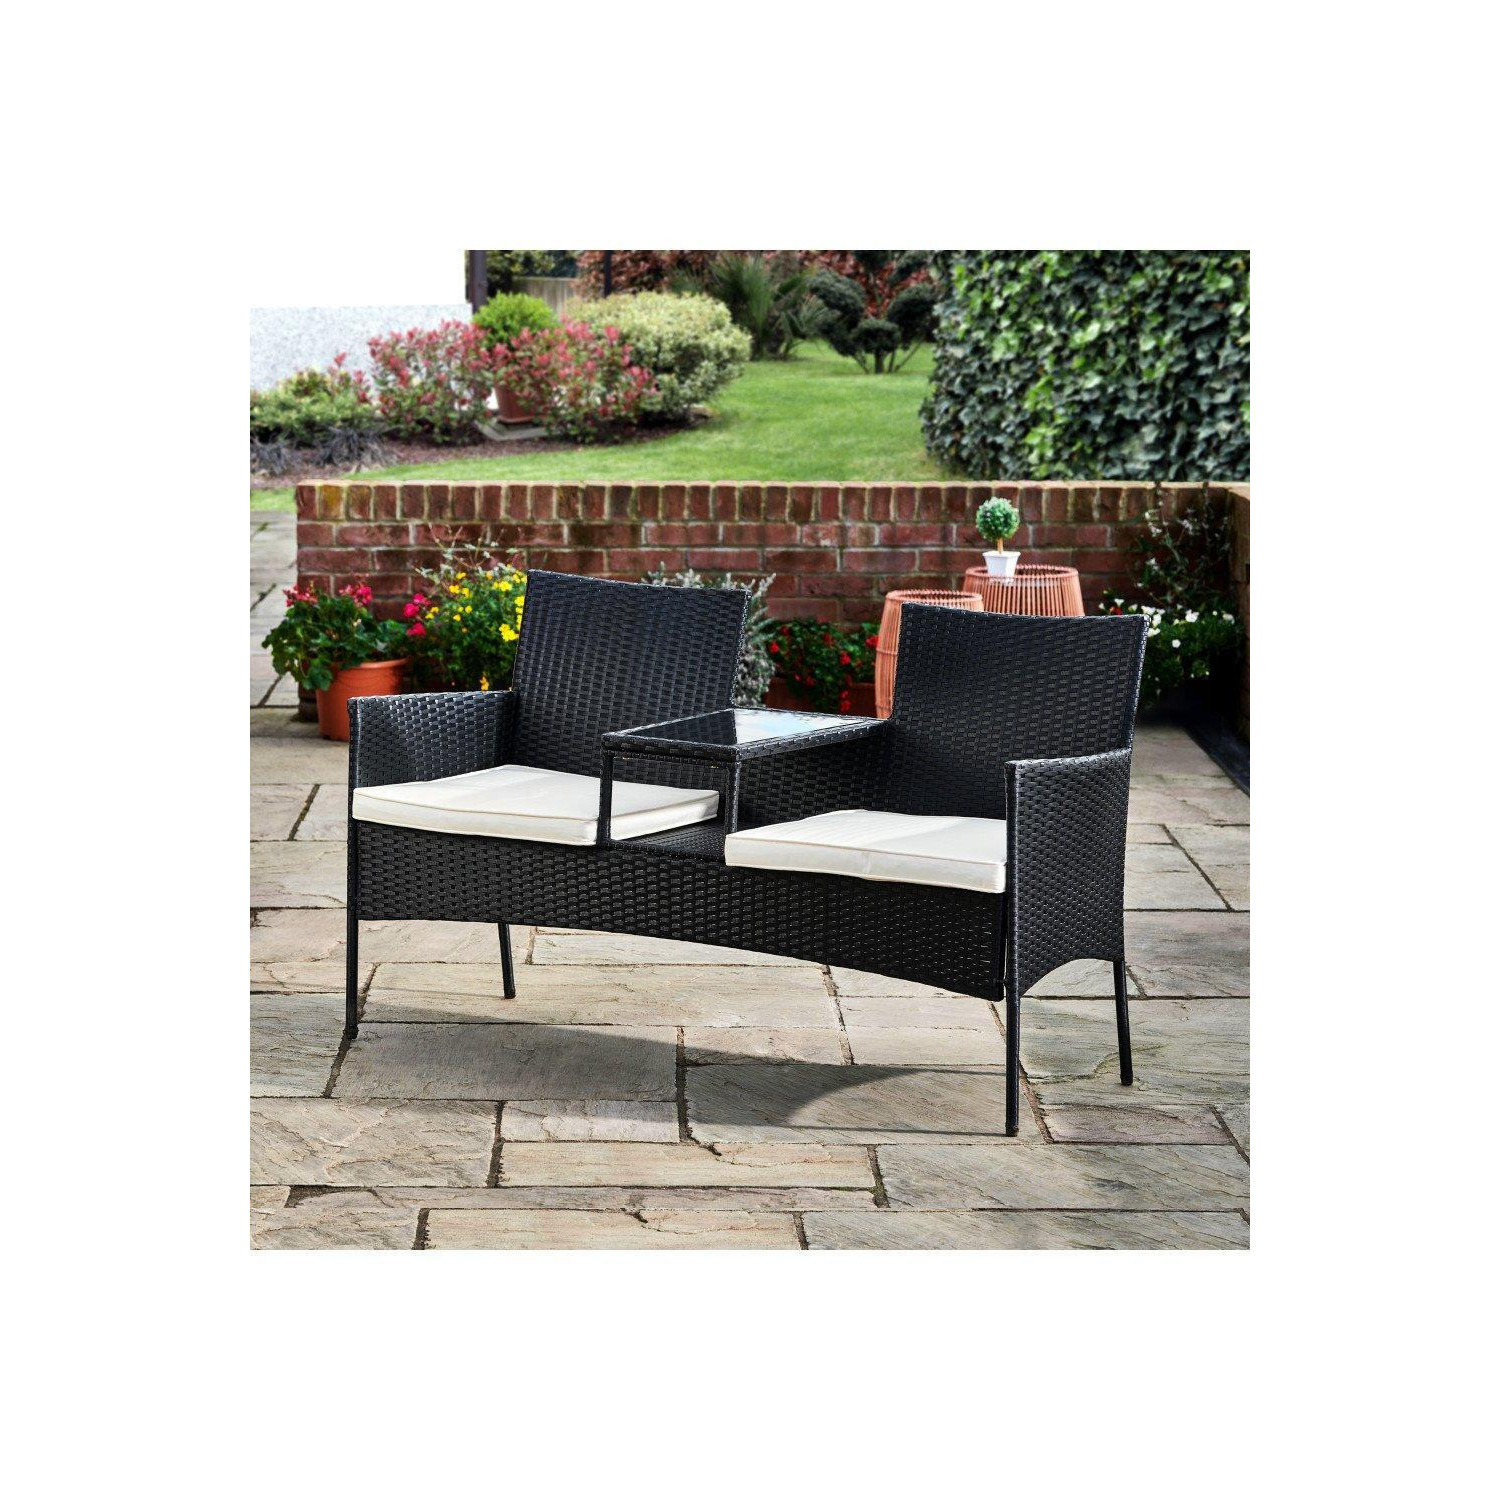 Outdoor Patio Garden Furniture, Rattan Wicker Loveseat Bench - image 1